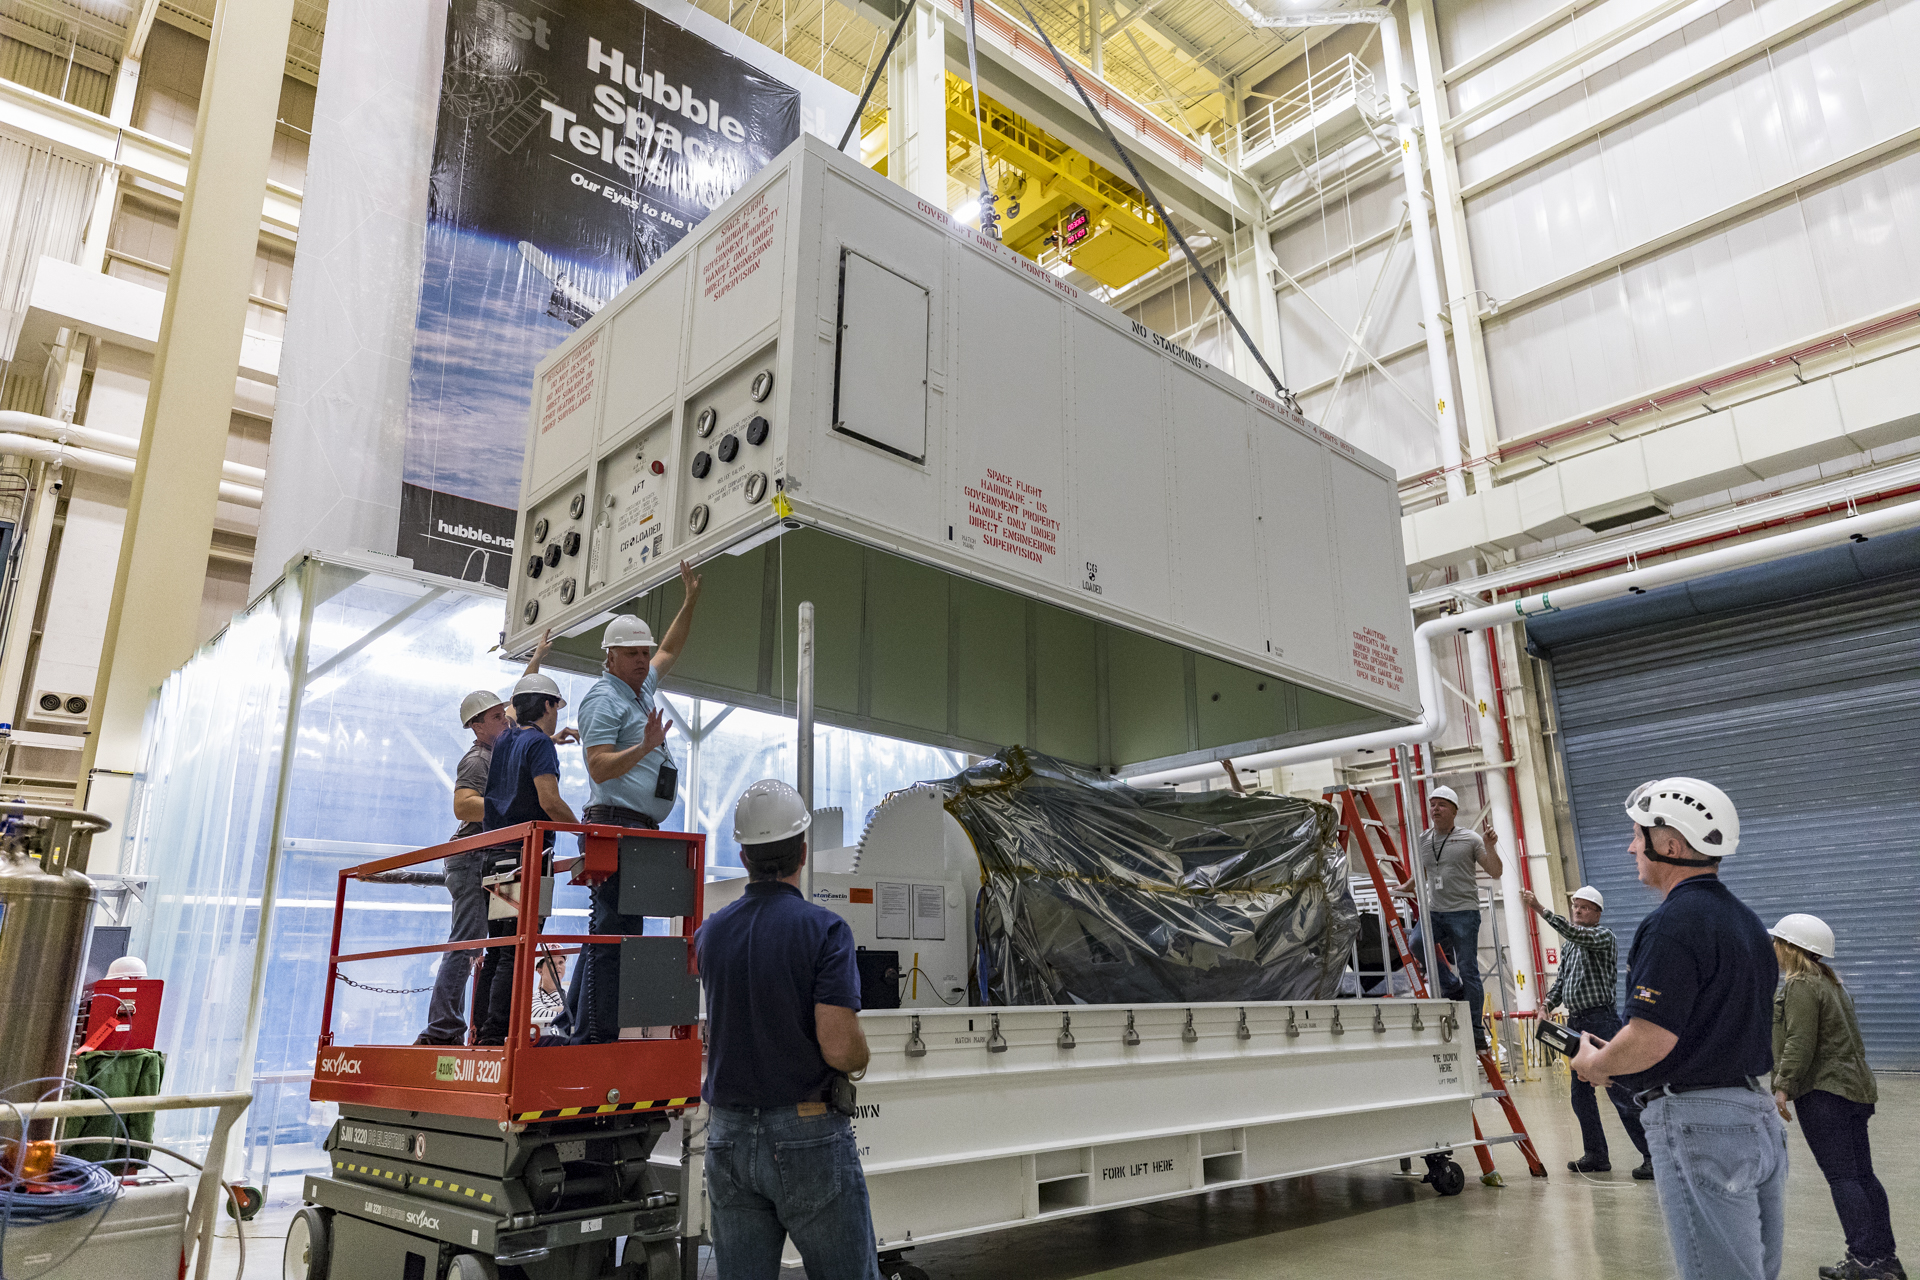 Parker Solar Probe arrives at Goddard